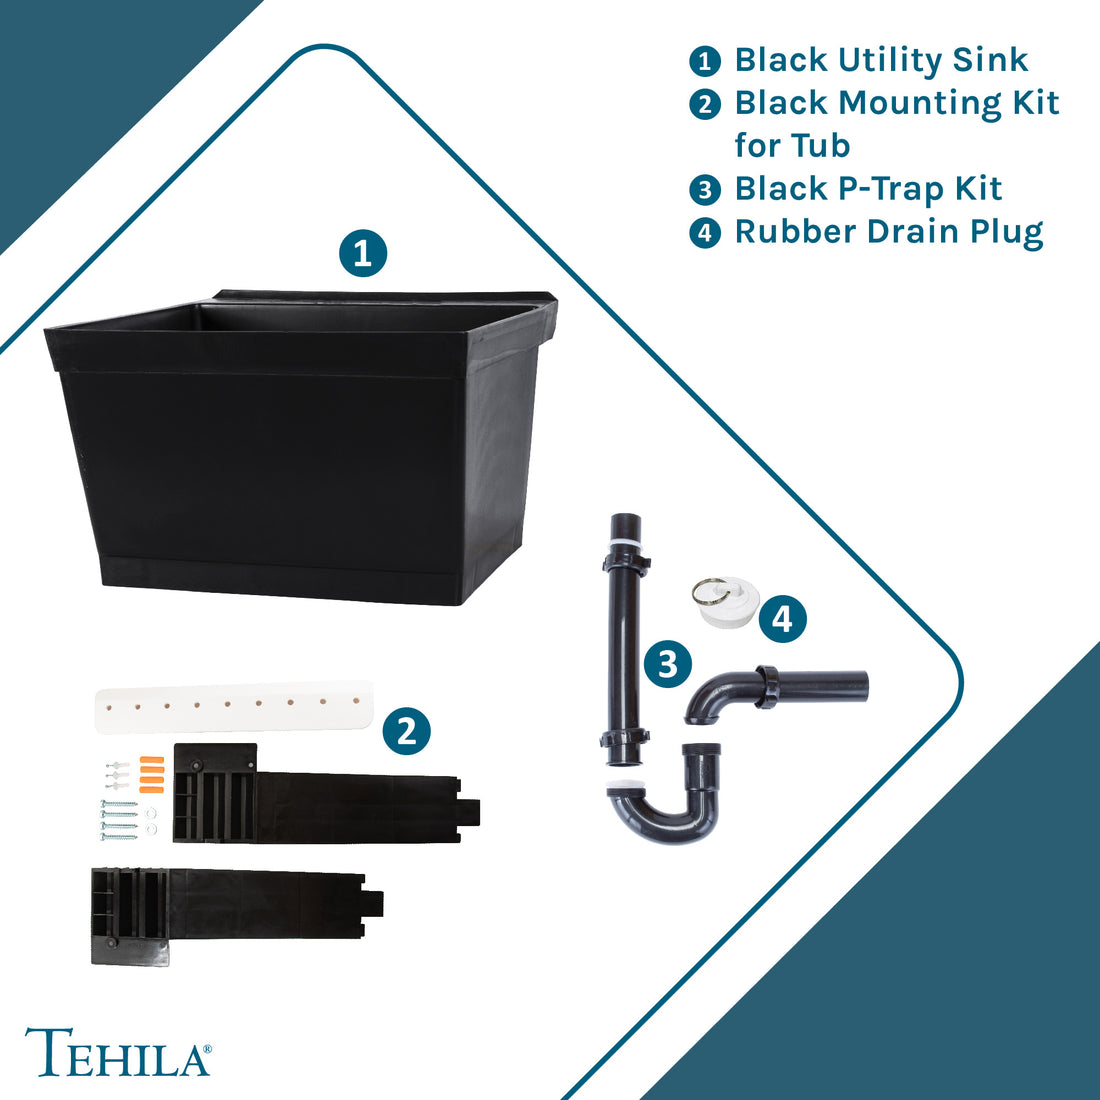 Tehila Black Standard Utility Sink Contents Black Utility Sink | Black Mounting Kit for Tub | Black P-Trap Kit | Rubber Drain Plug